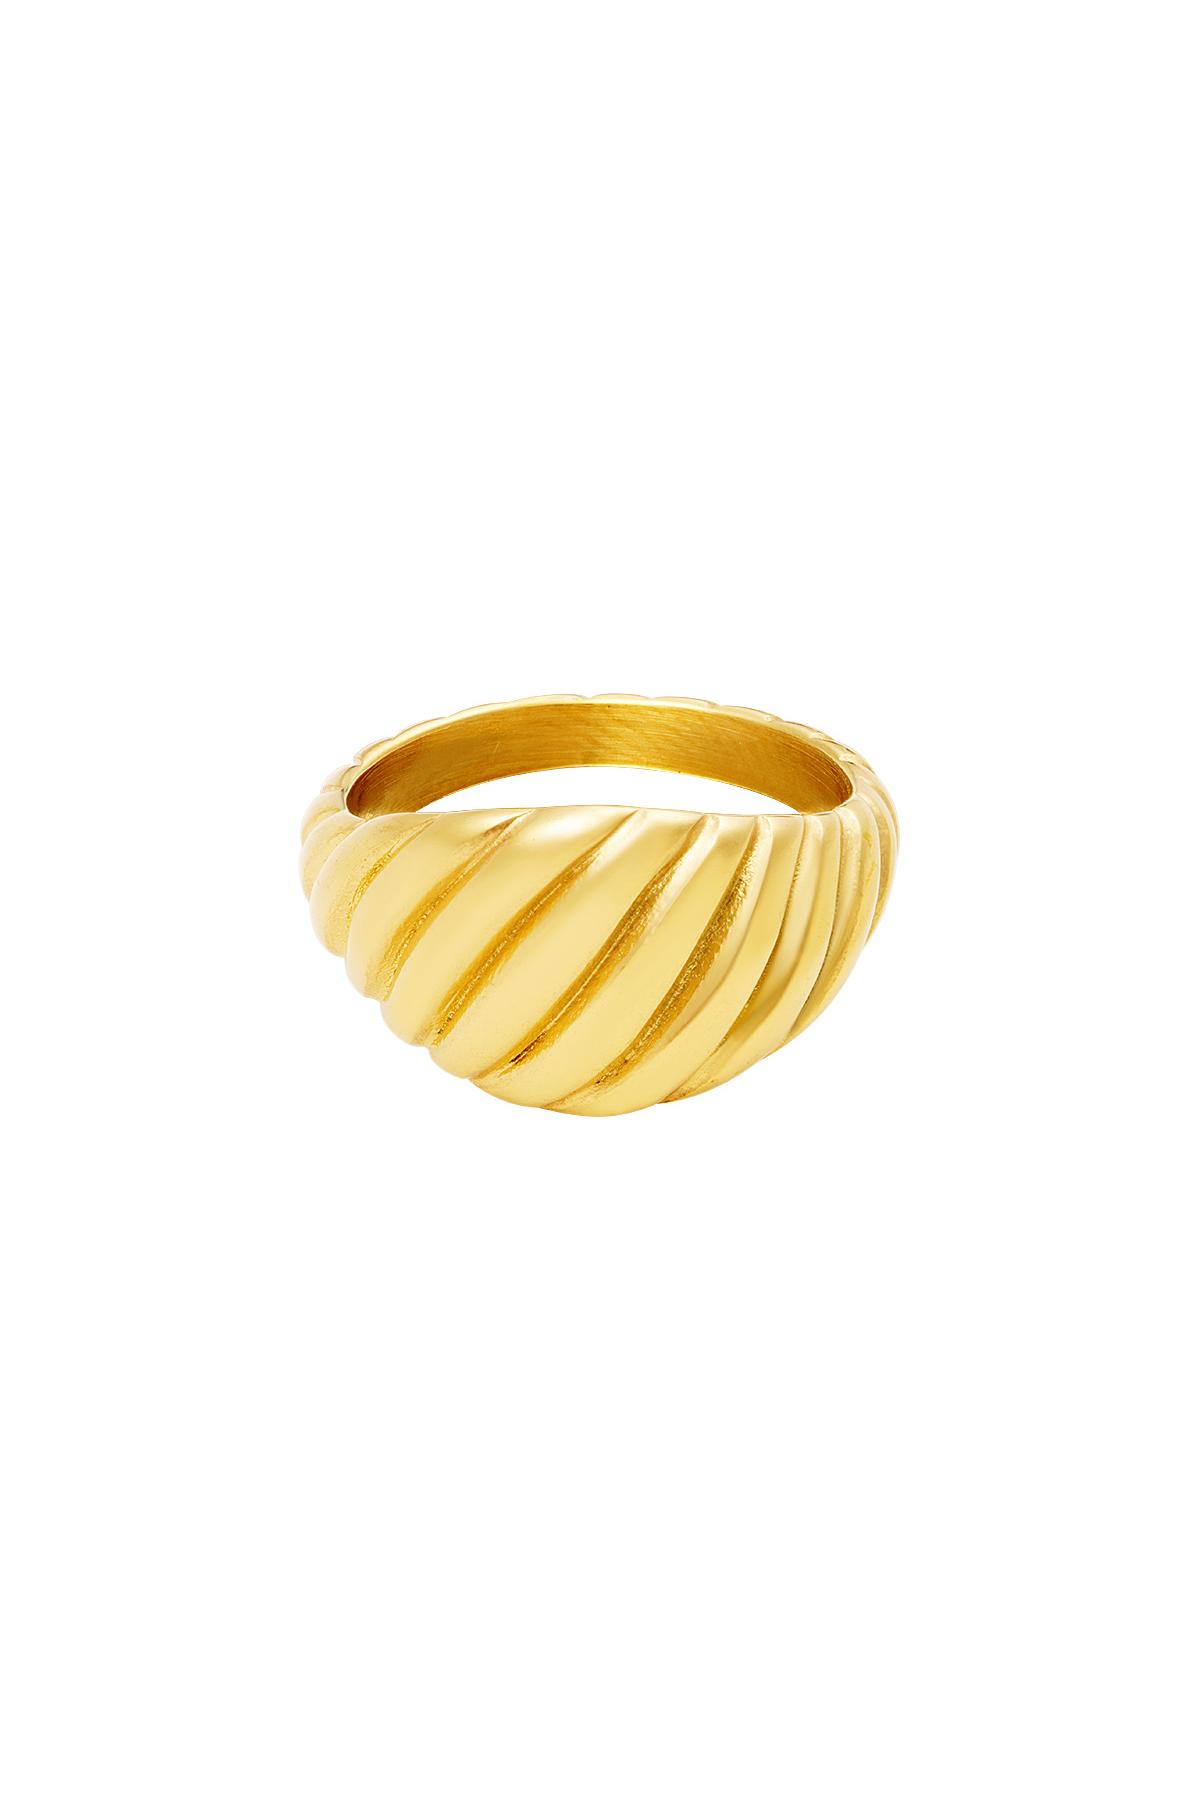 Baquette-Ring Gold Edelstahl 16